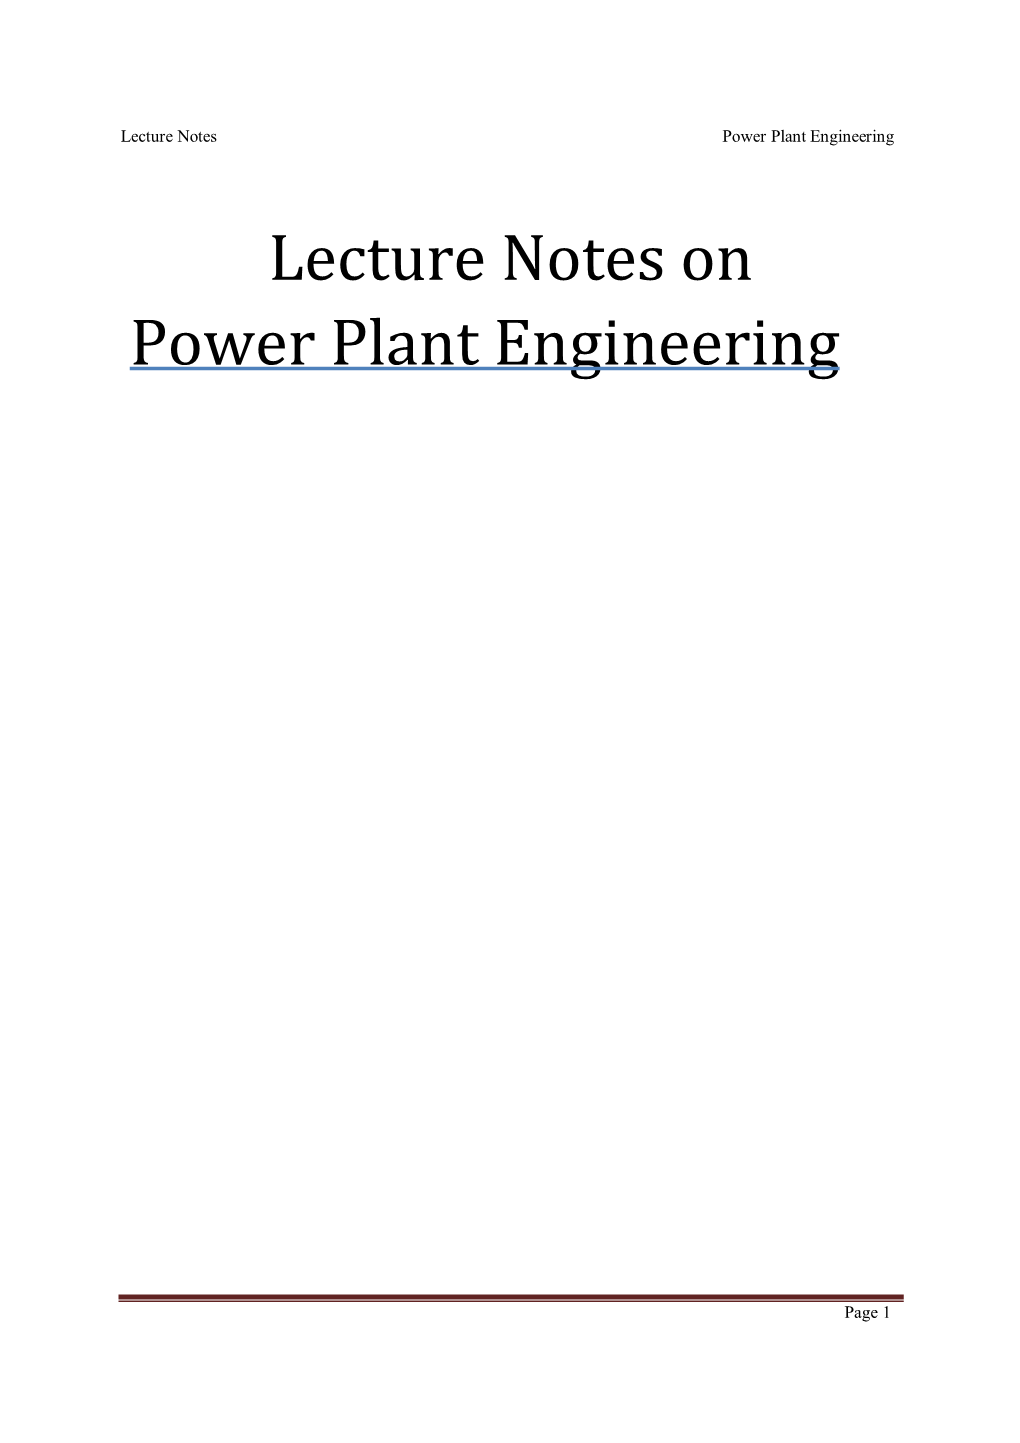 [Power Plant Engineering]